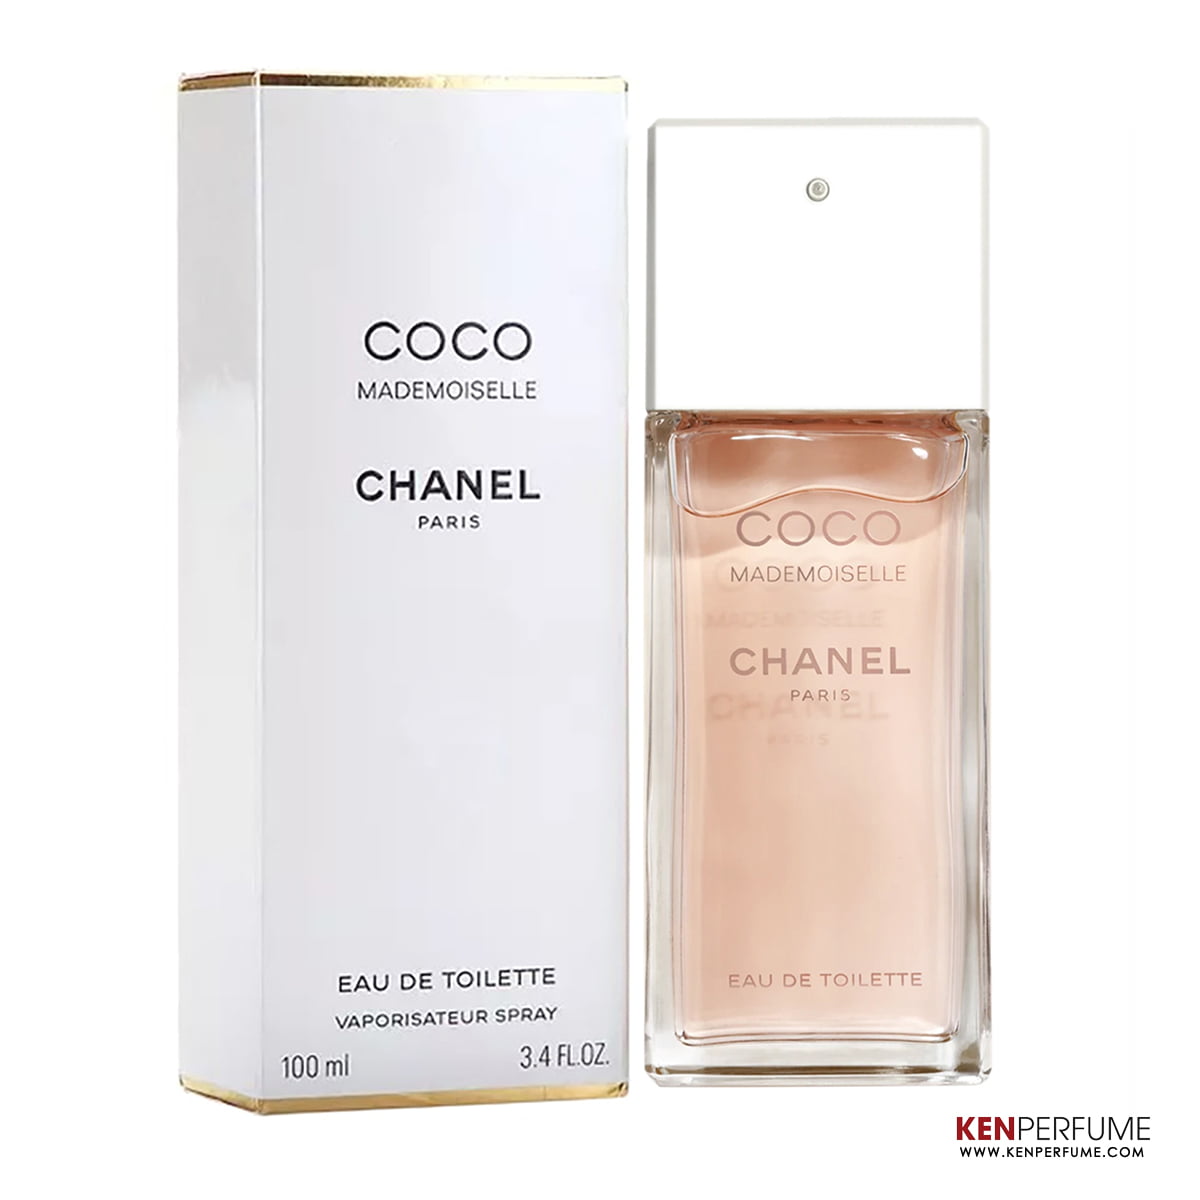 Nước hoa Chanel Coco Mademoiselle Eau De Parfum chính hãng